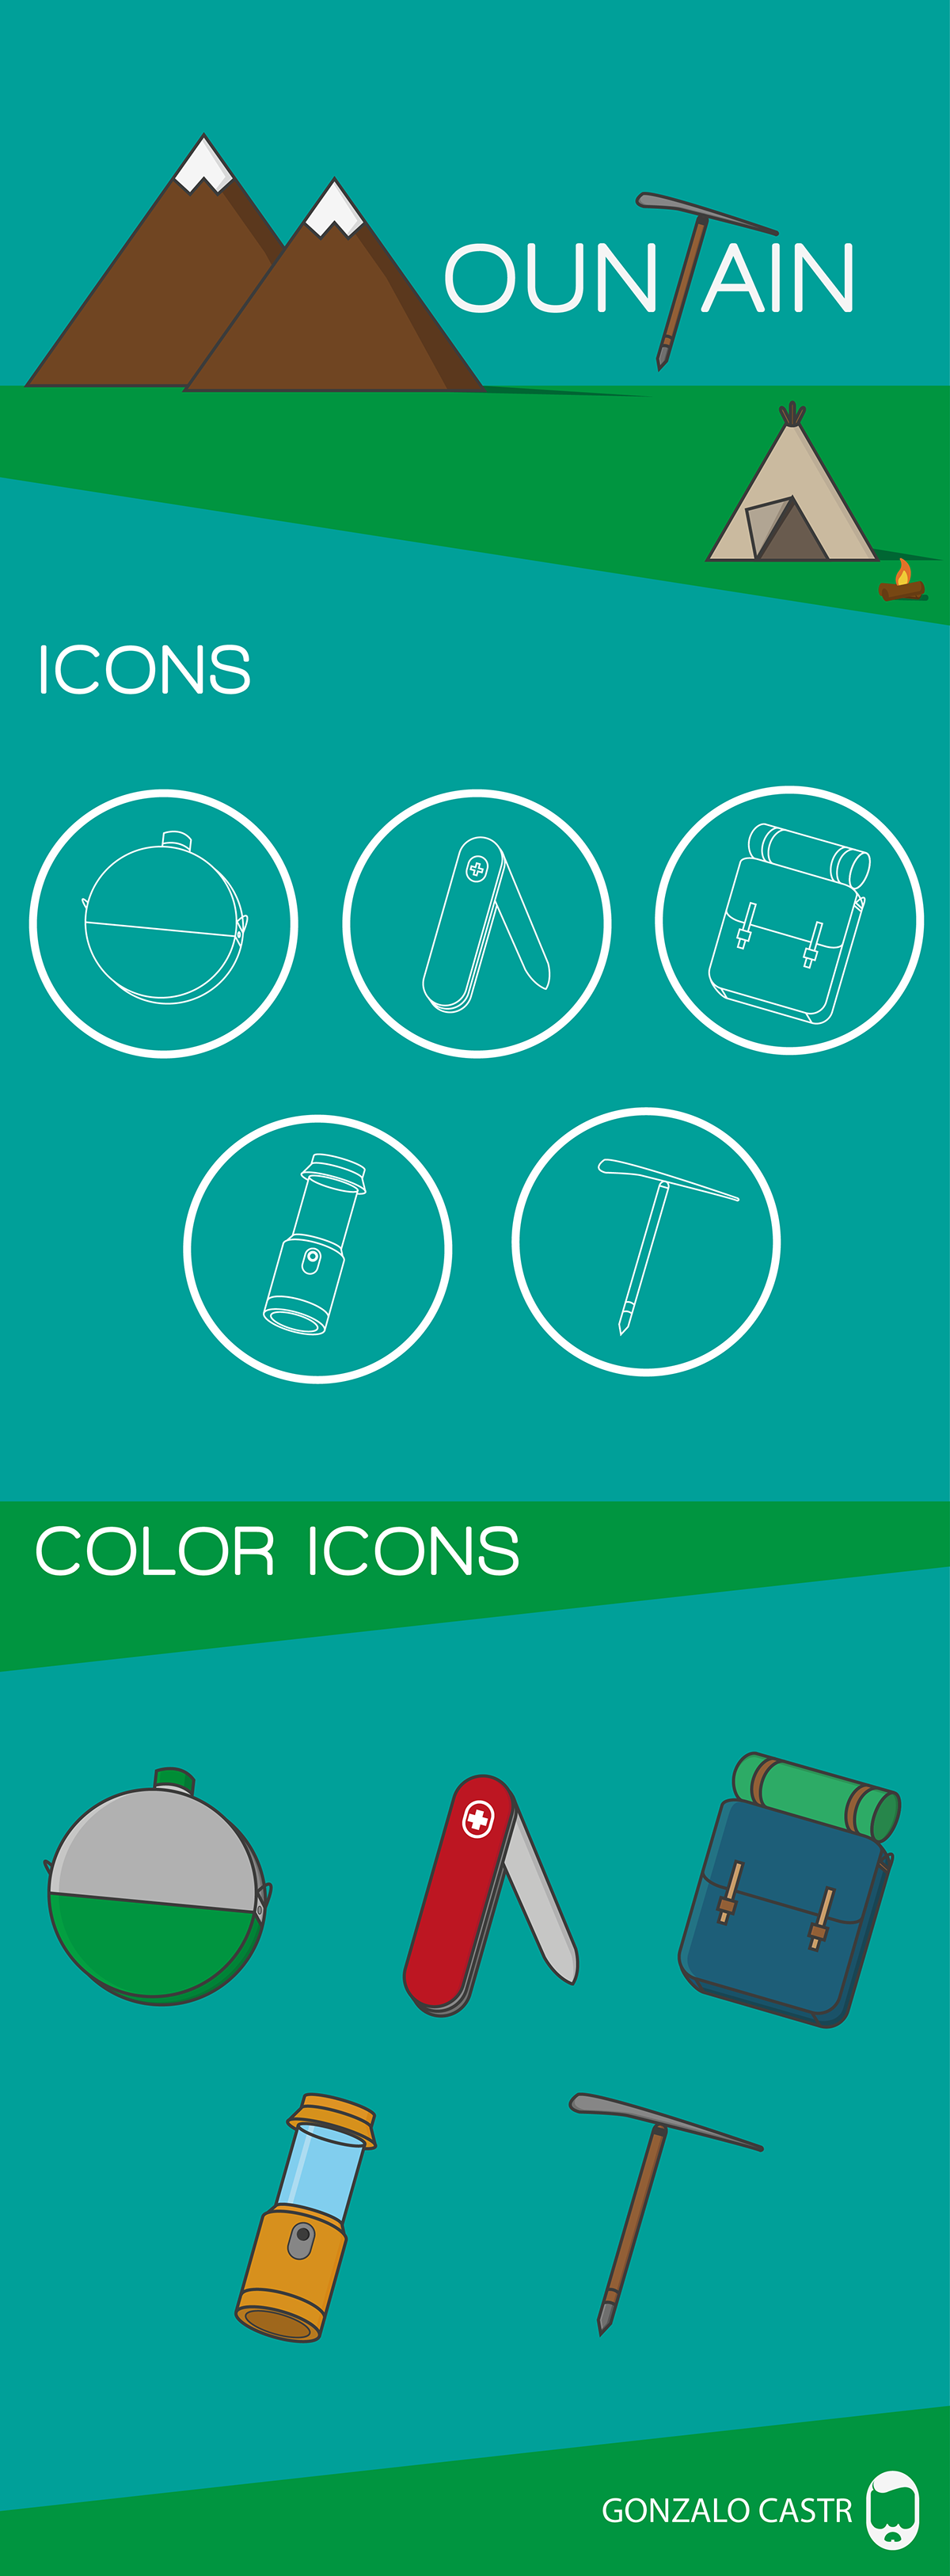 diseño design icons mountain Montana icons colors Work  trabajo graphicdesign diseño gráfico Icon Iconos logo